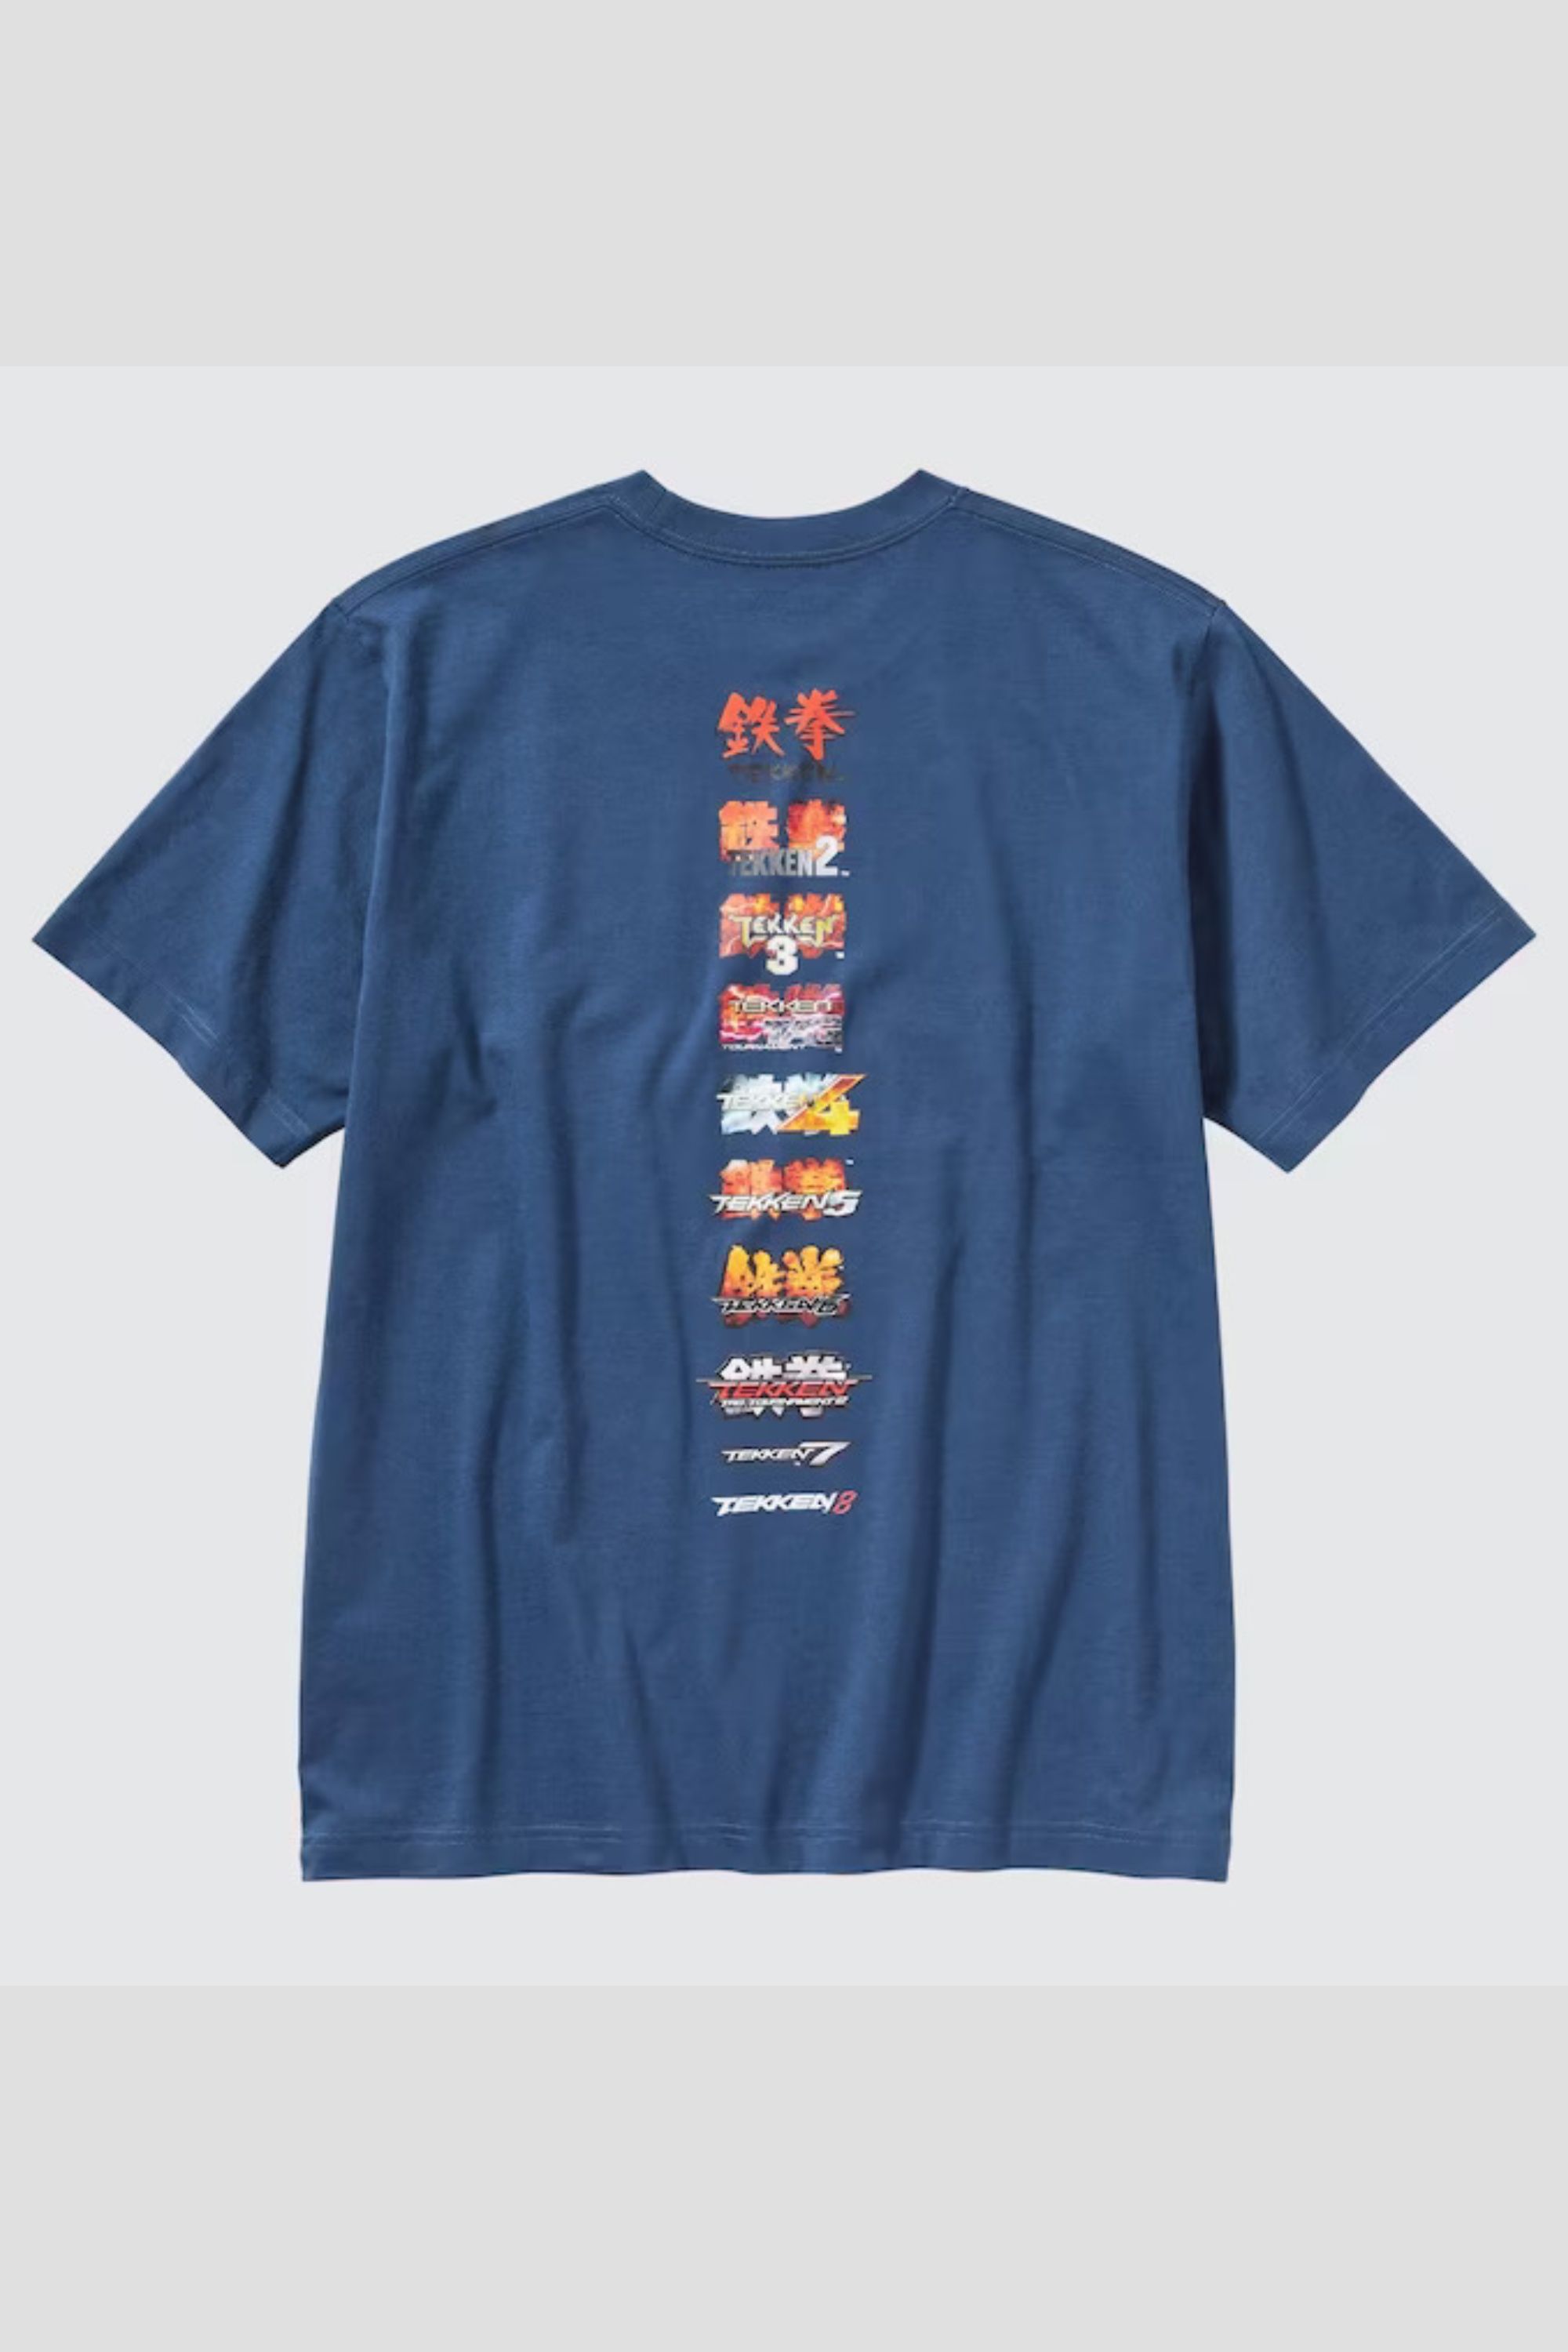 uniqlo tekken logos t-shirt